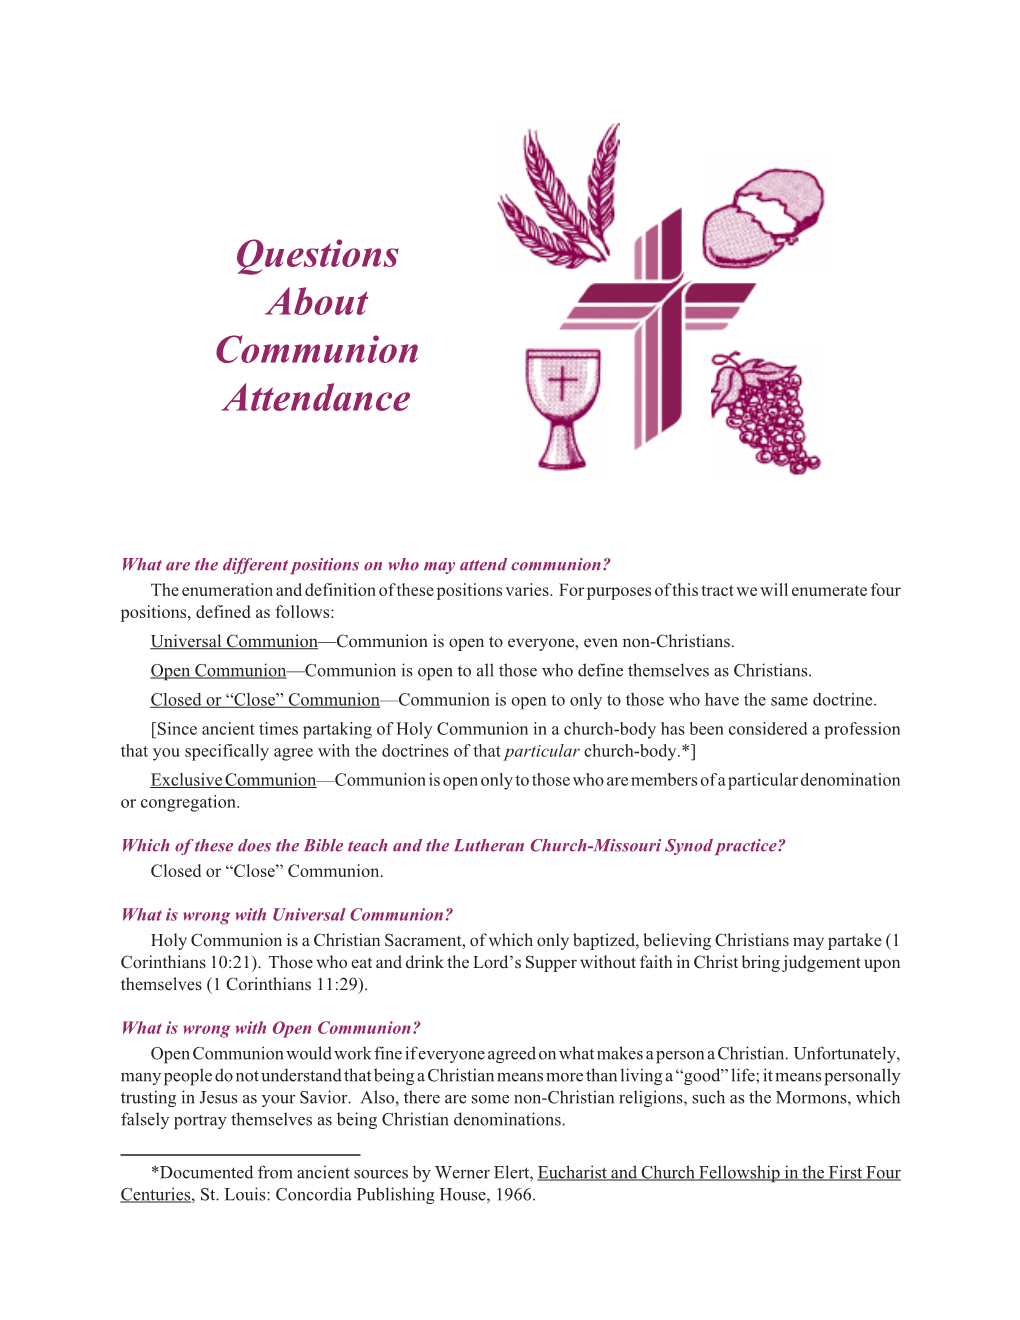 Questions About Communion Attendance